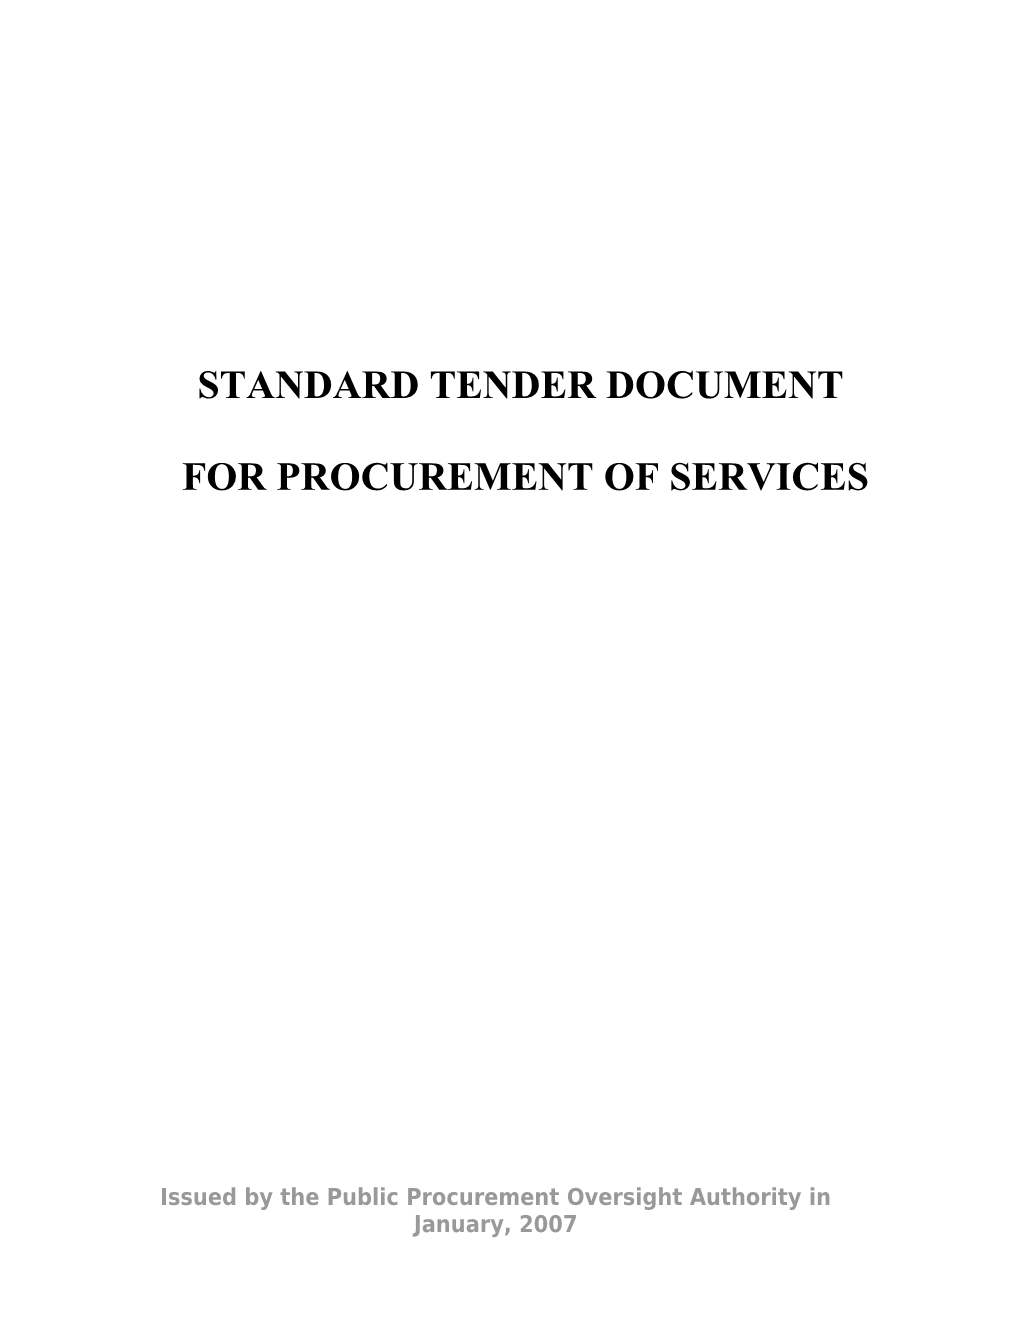 Standard Tender Document for Procurement of Services